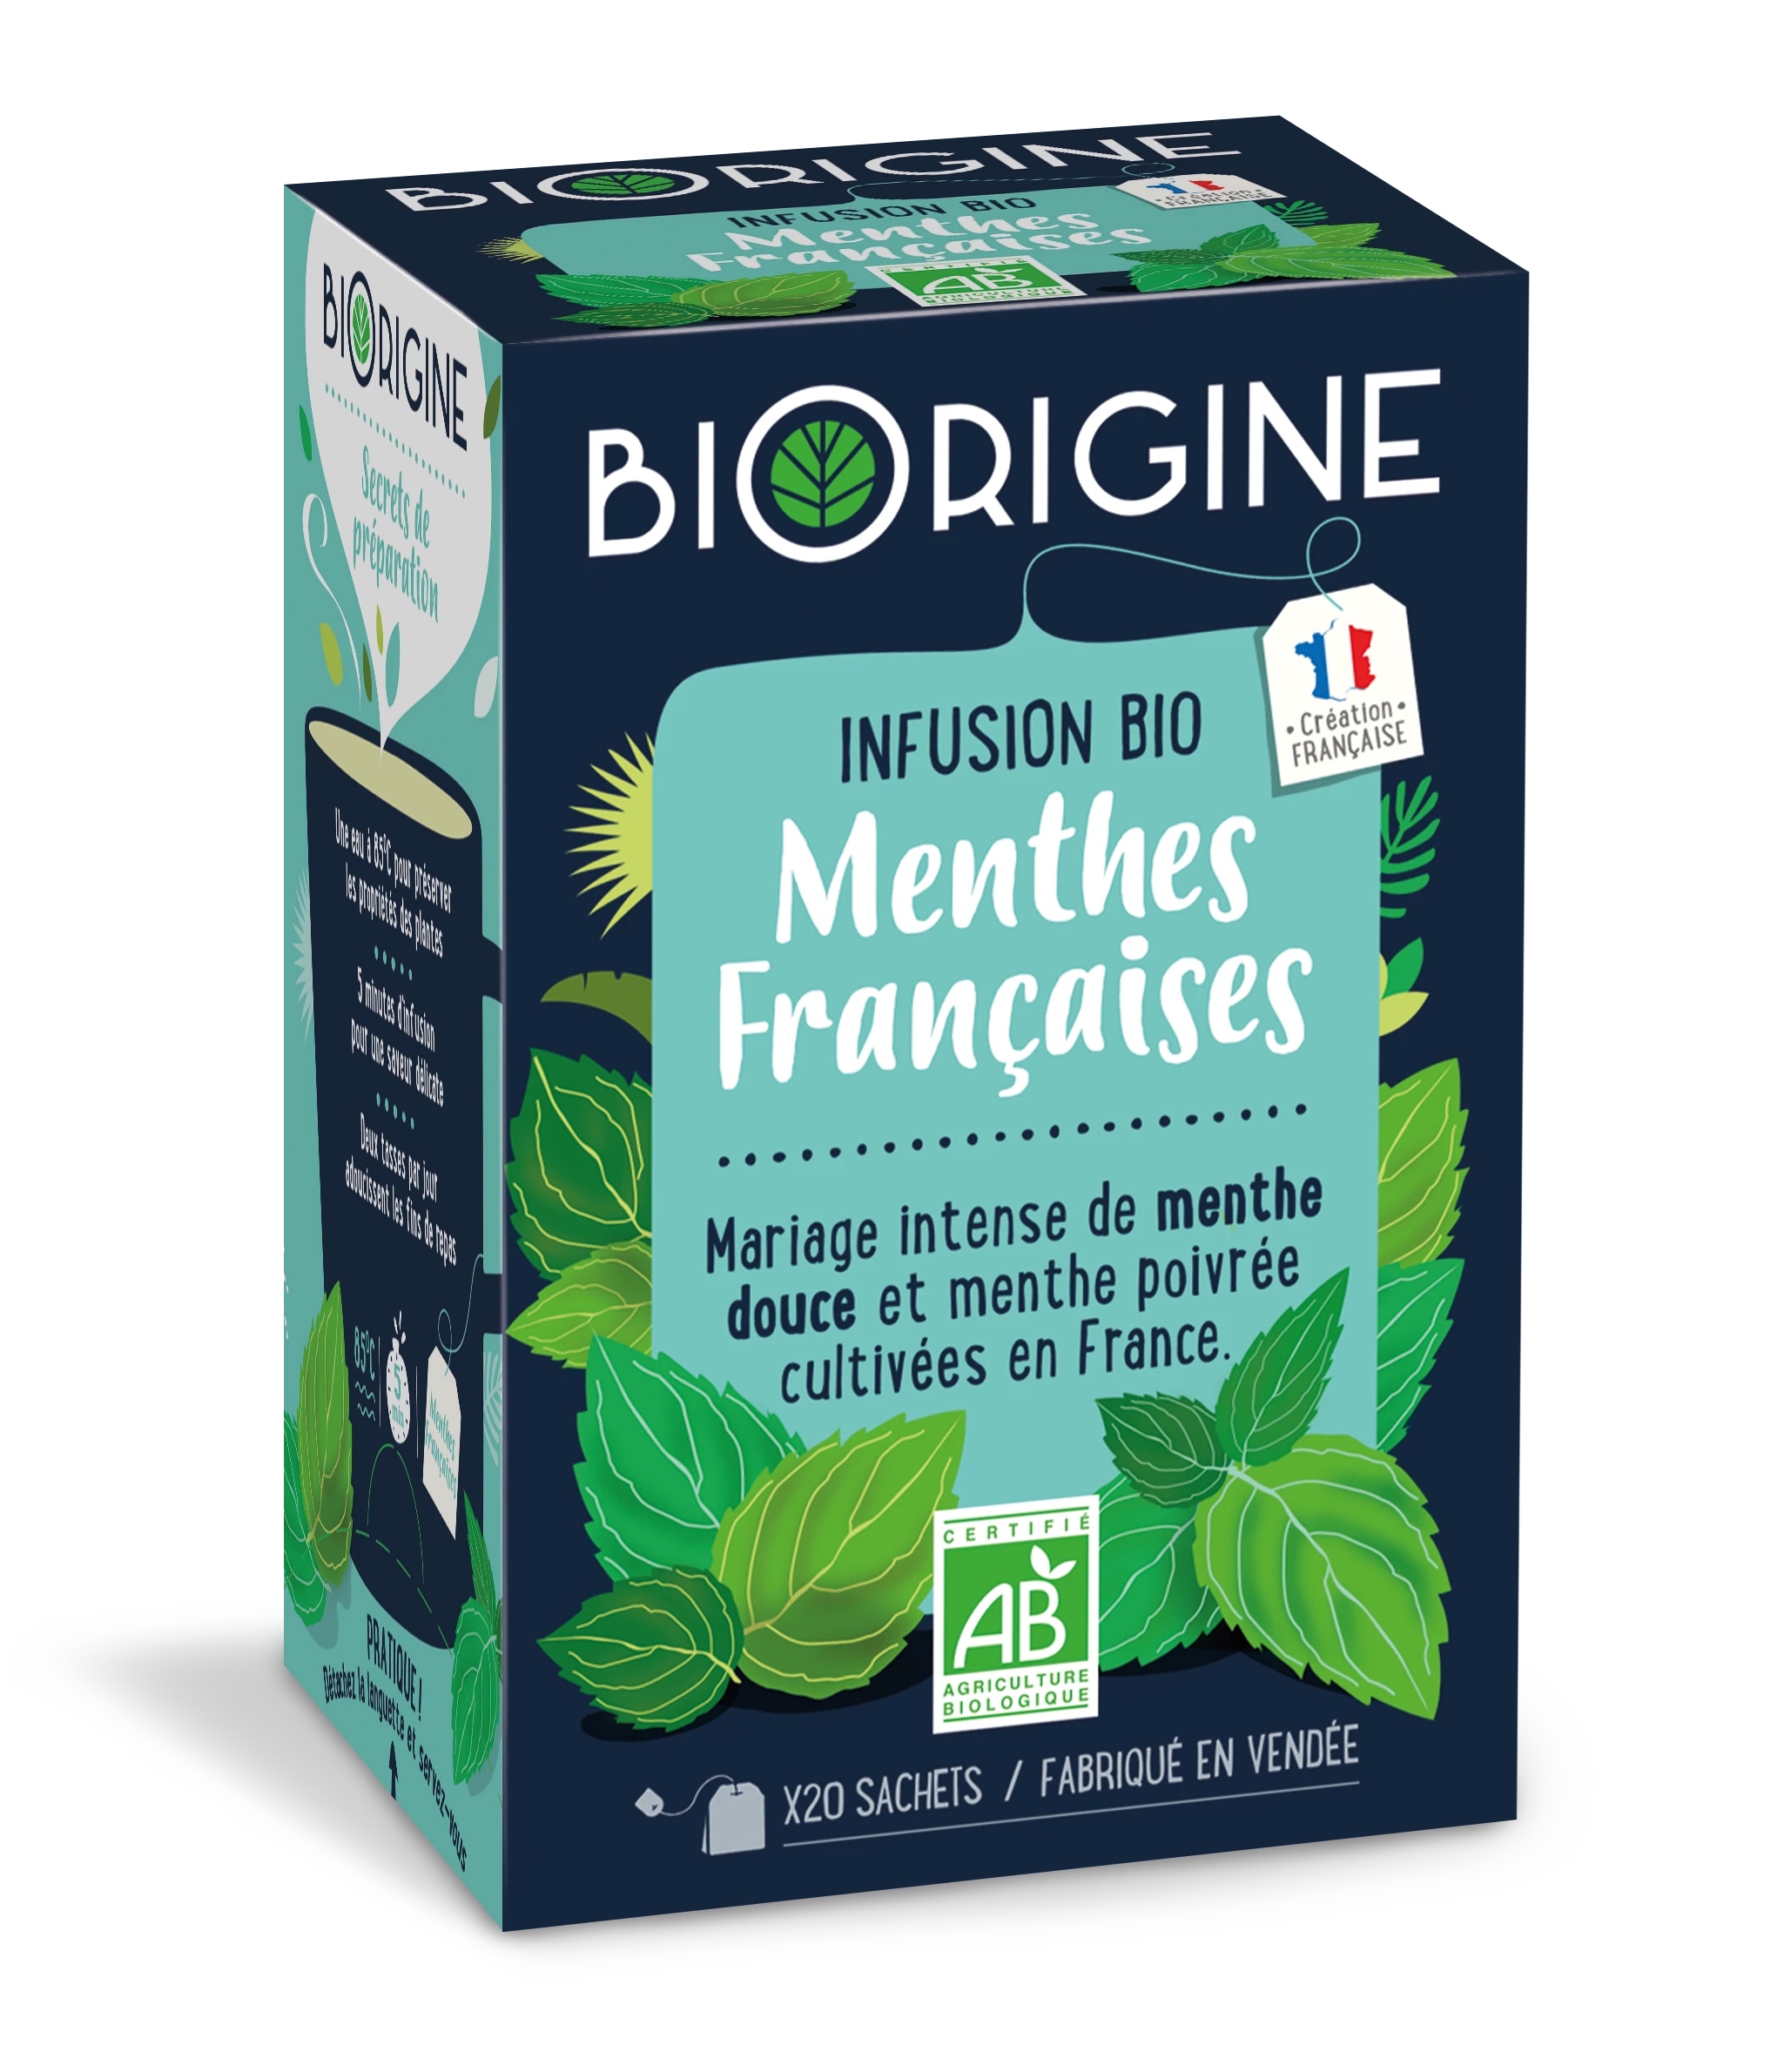 Organic French mint infusion, 50g, BioRIGINE